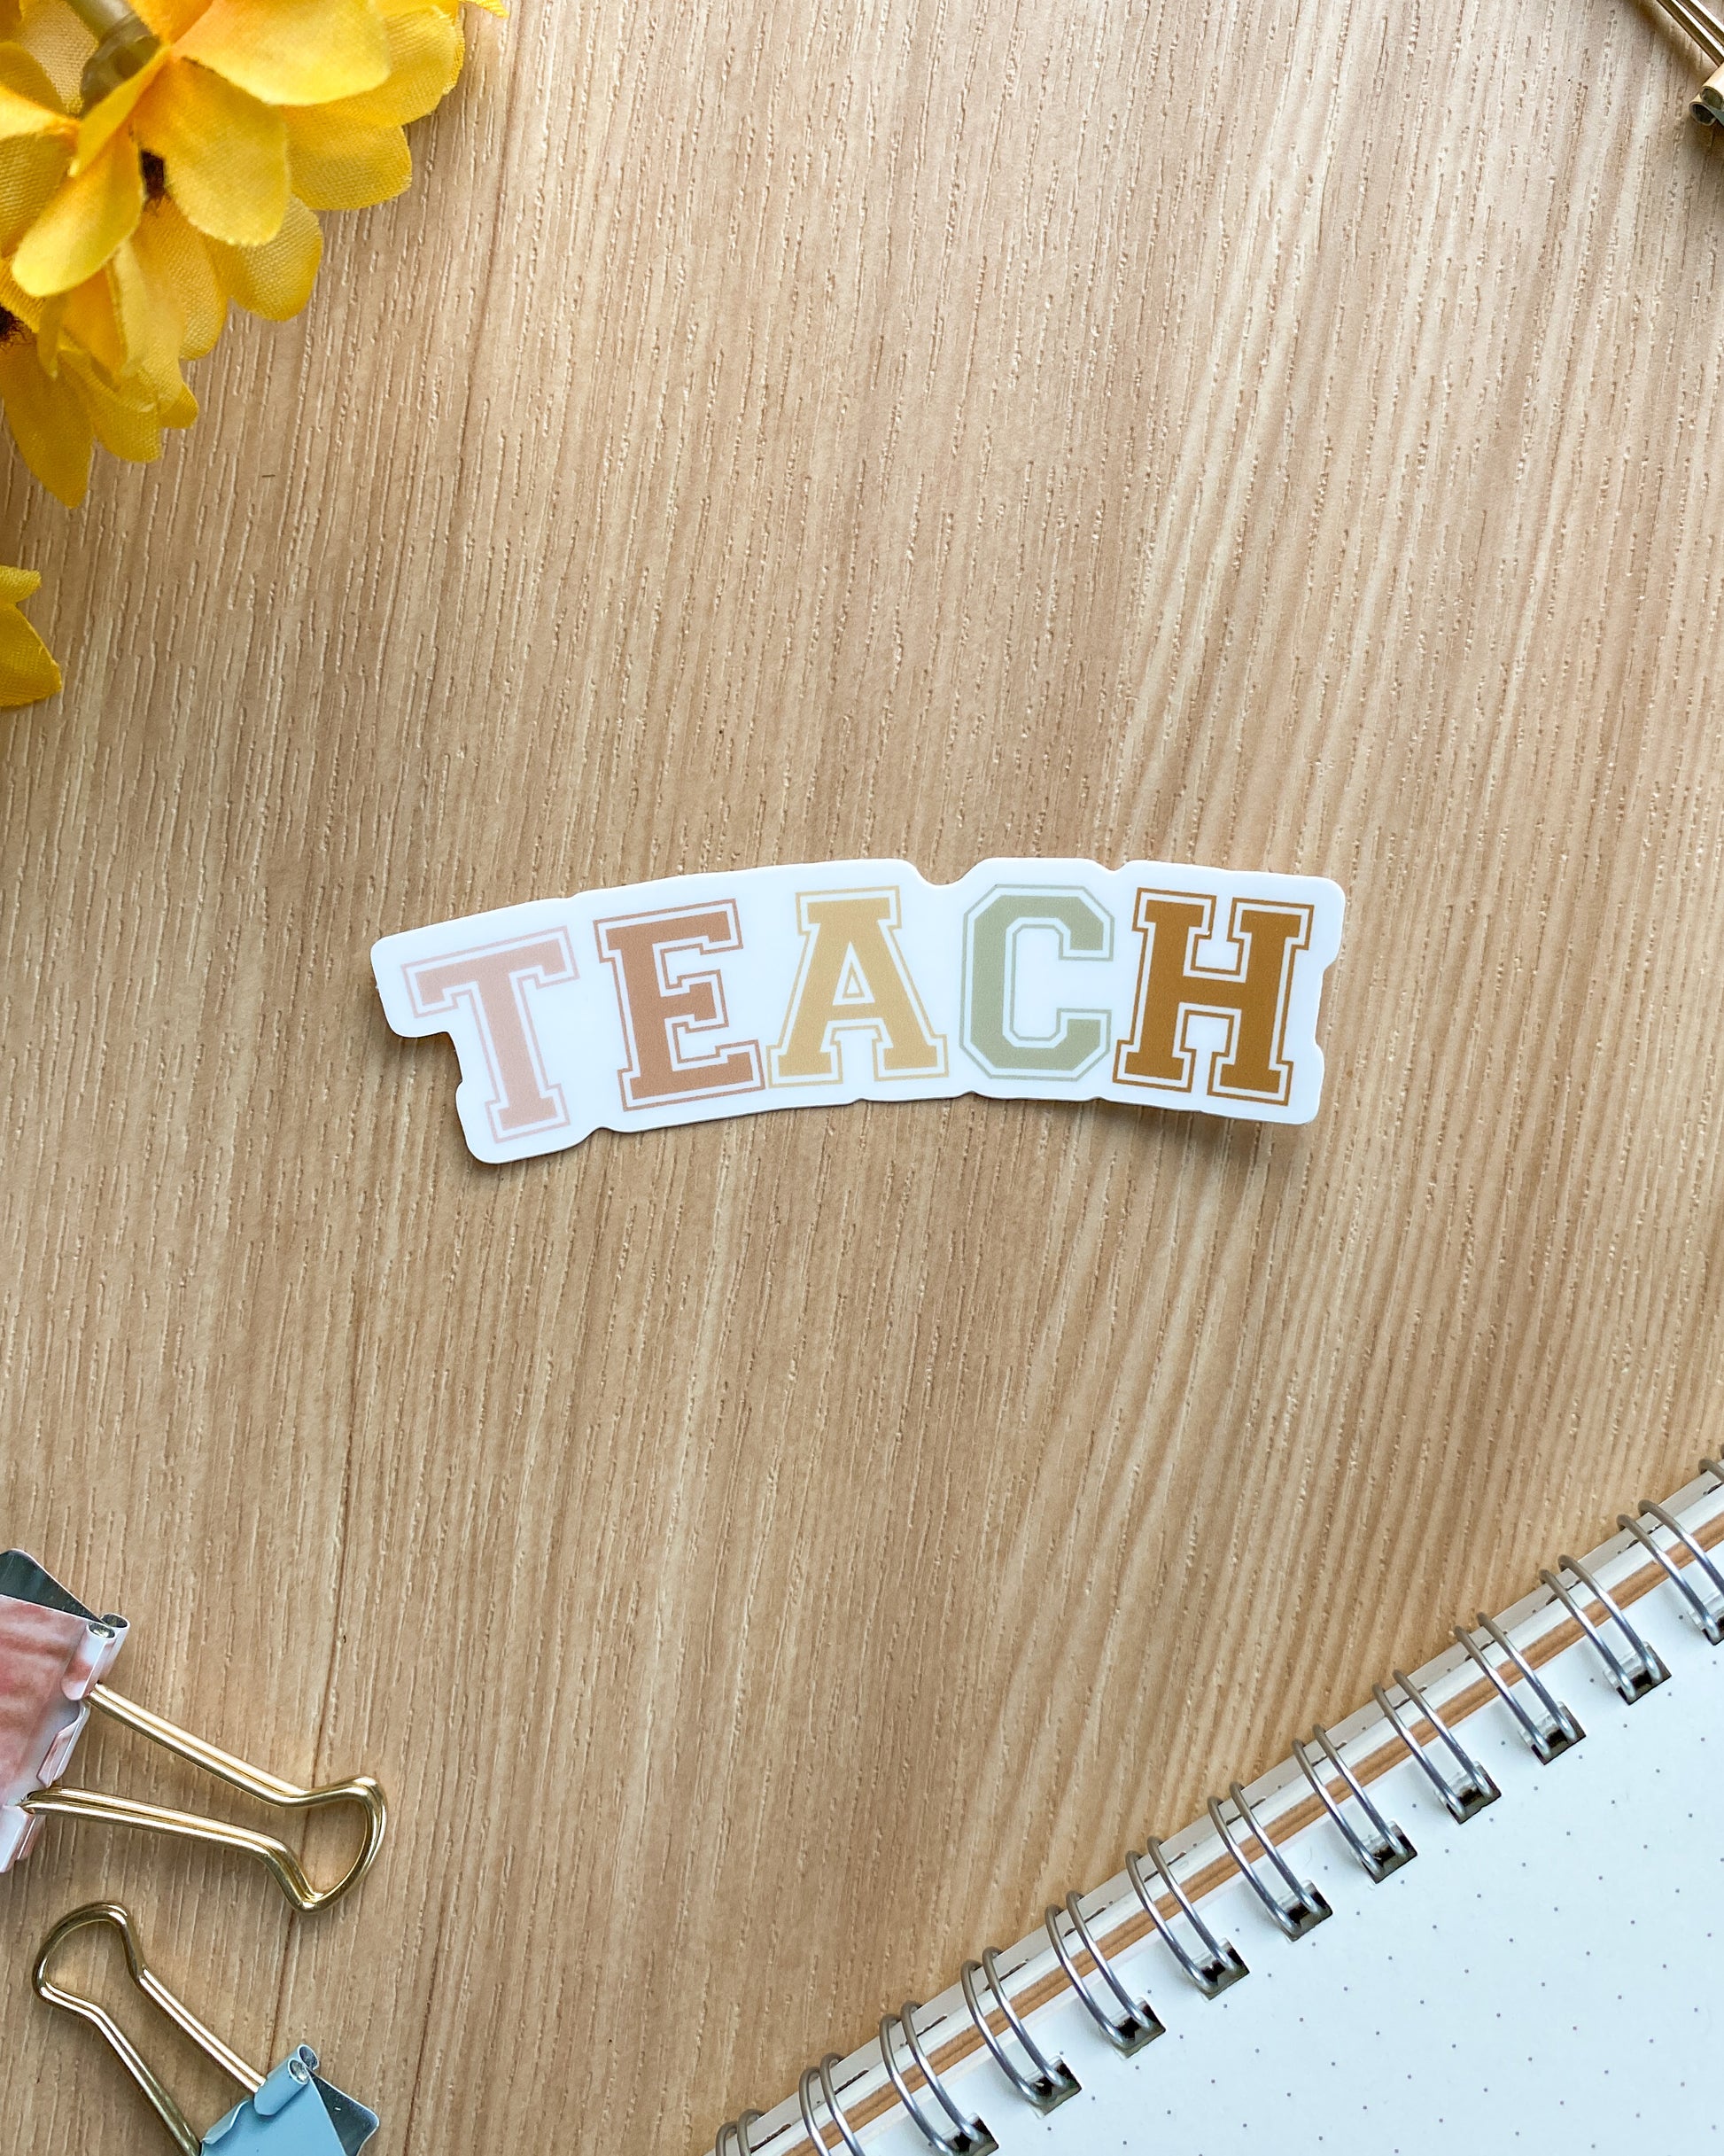 Teacher Sticker Pack – Created By Christine